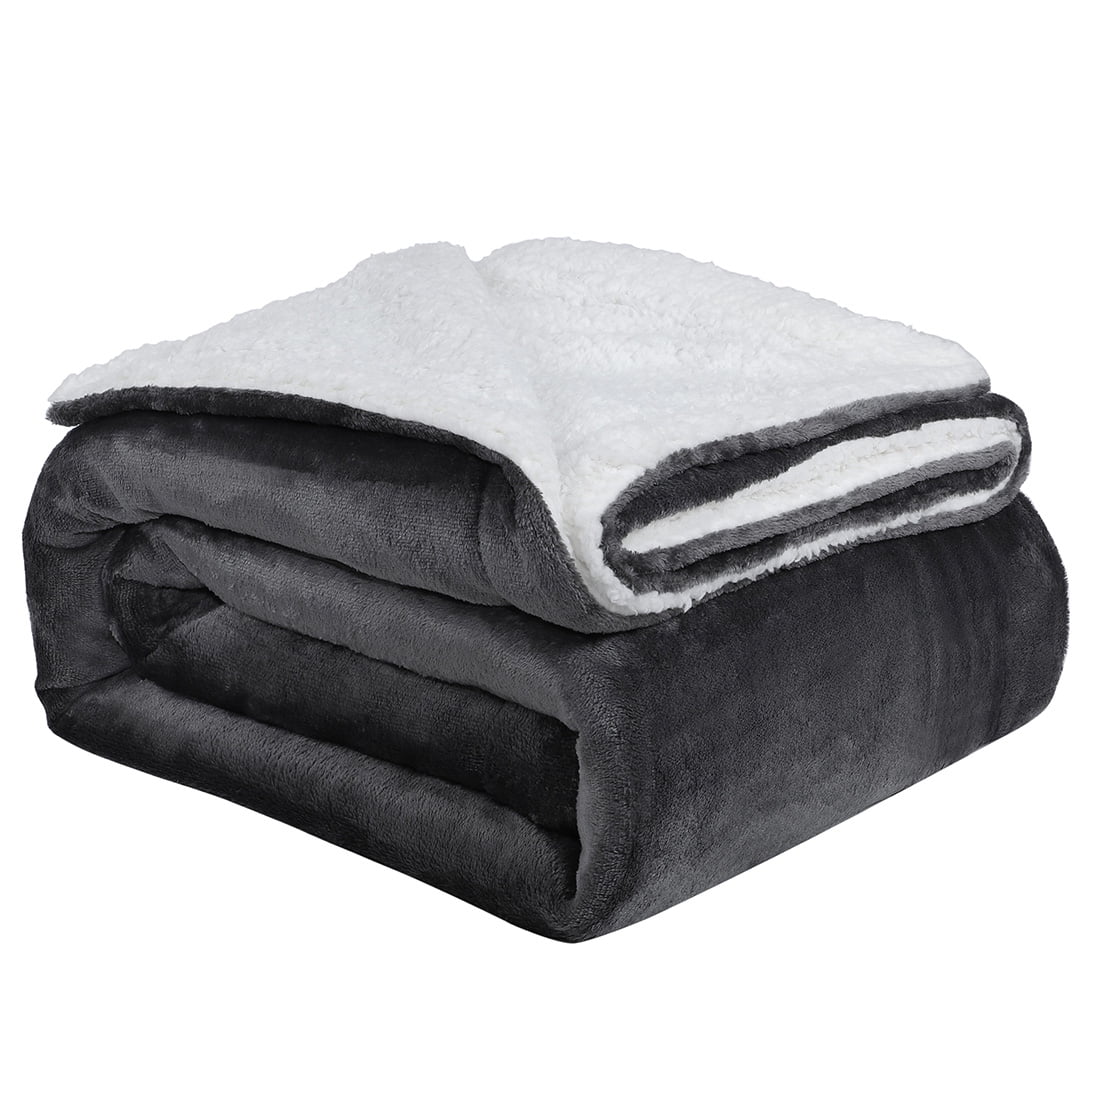 Soft Plush Fleece Blanket Dark Gray White 130 X 150cm Walmart Canada